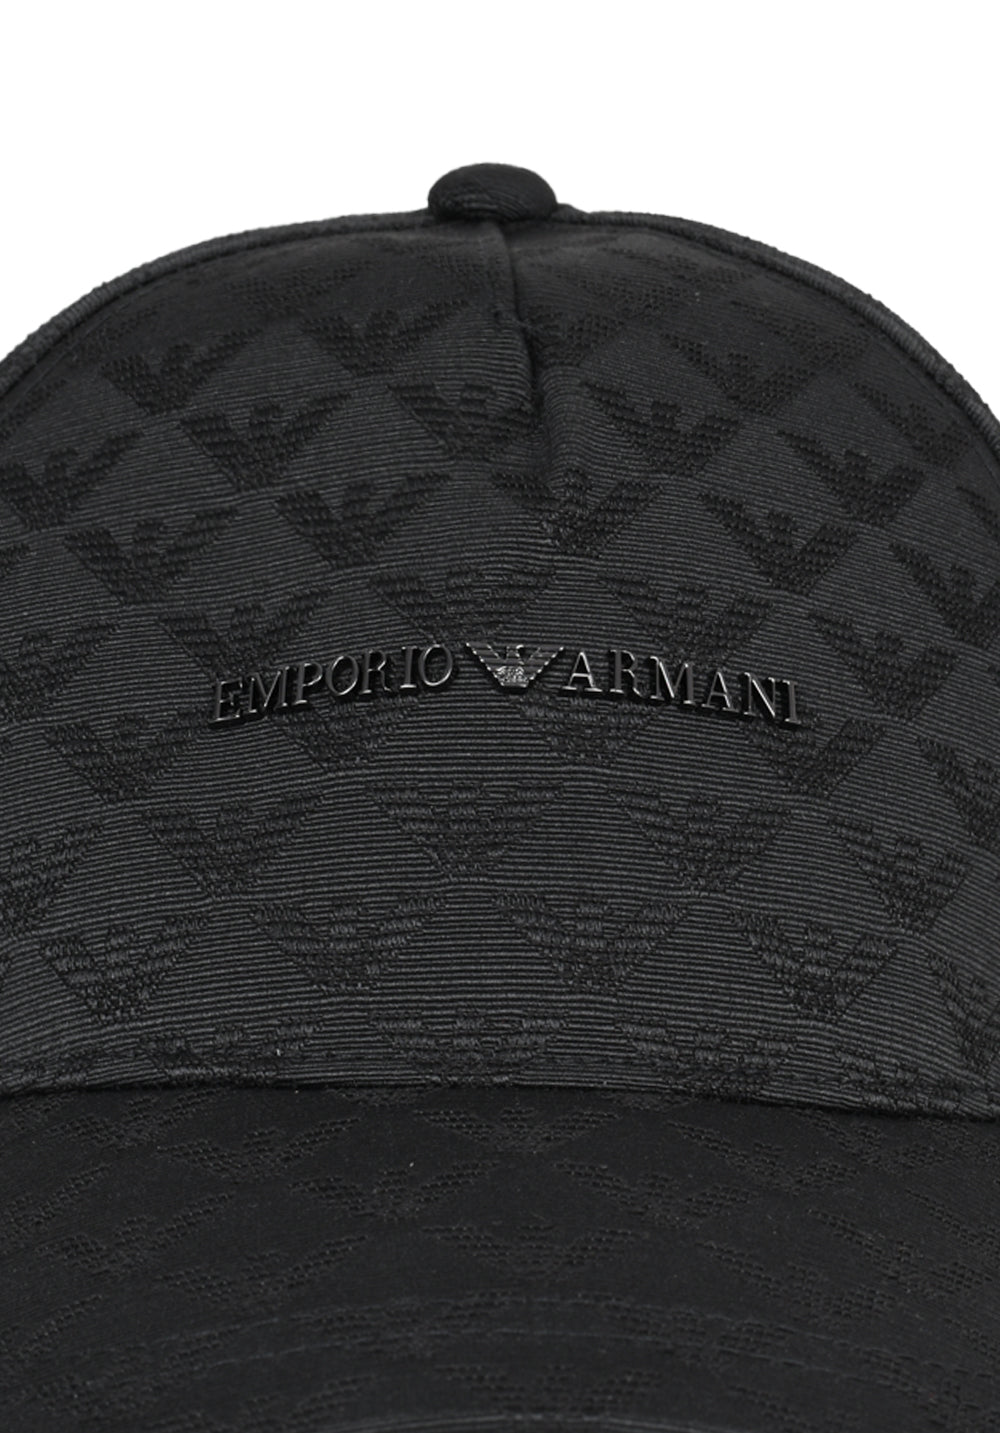 Emporio Armani logo print cap